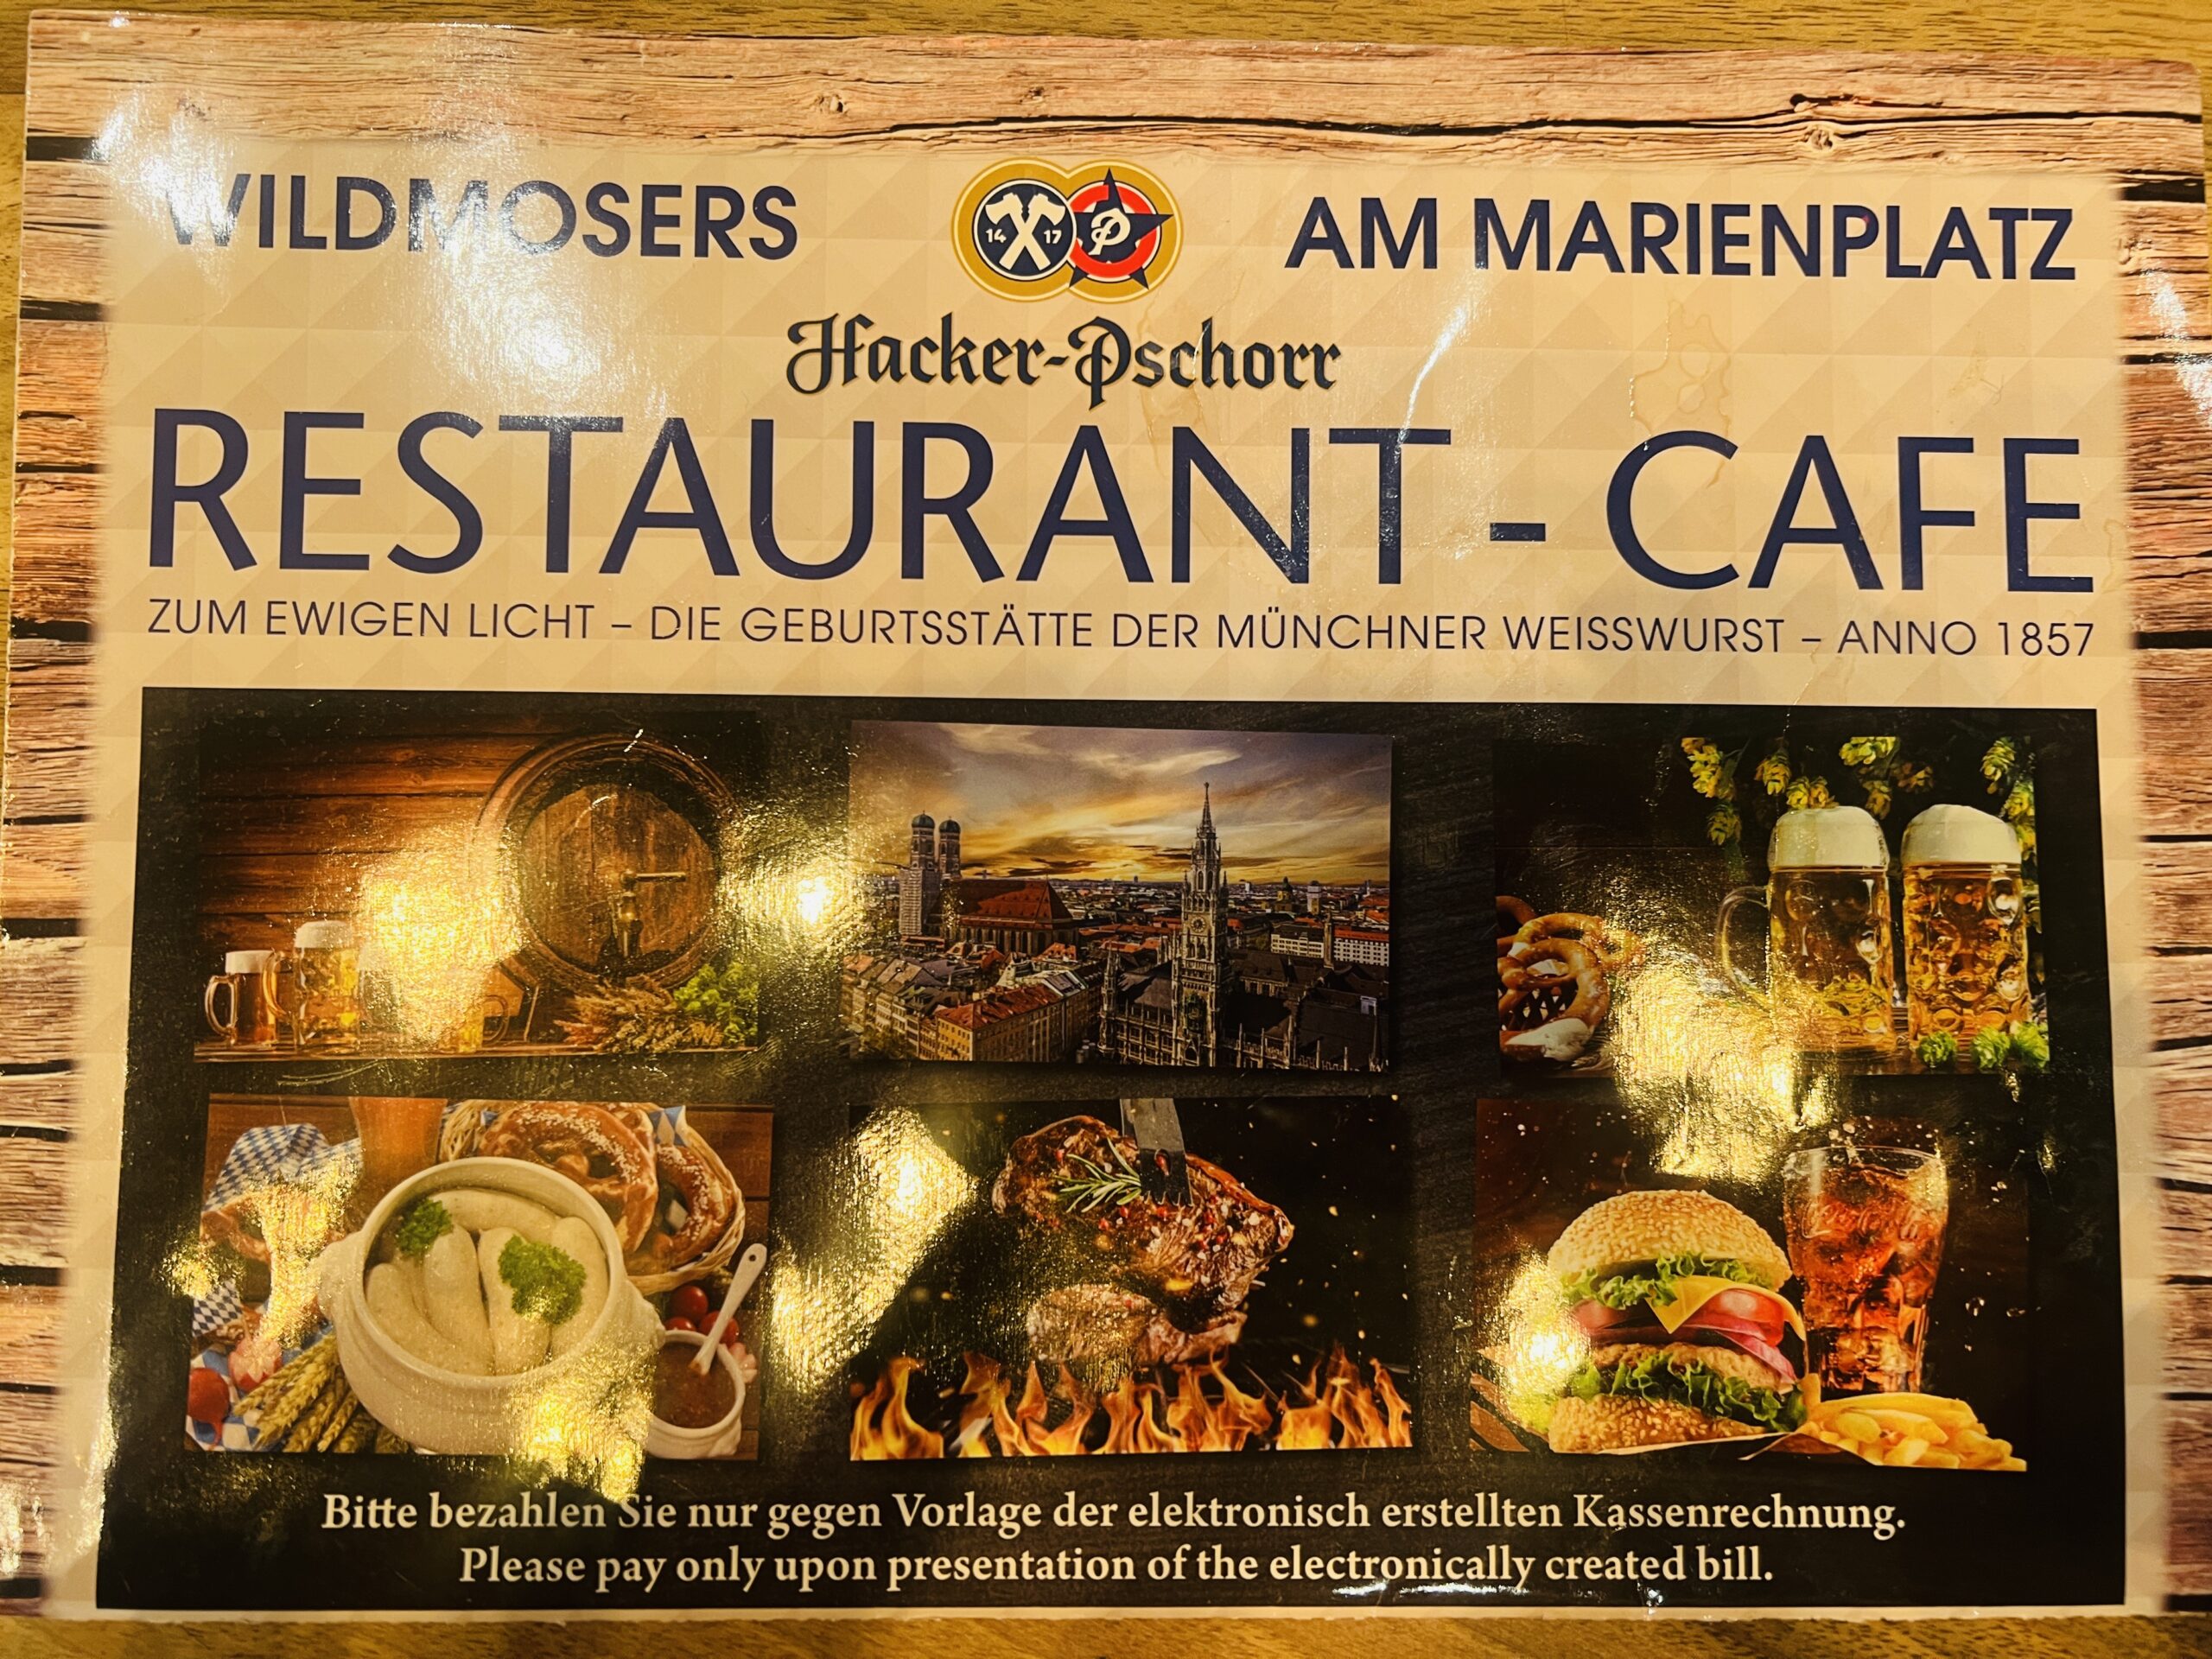 Wildmosers Restaurant-Cafe at Marienplatz 1